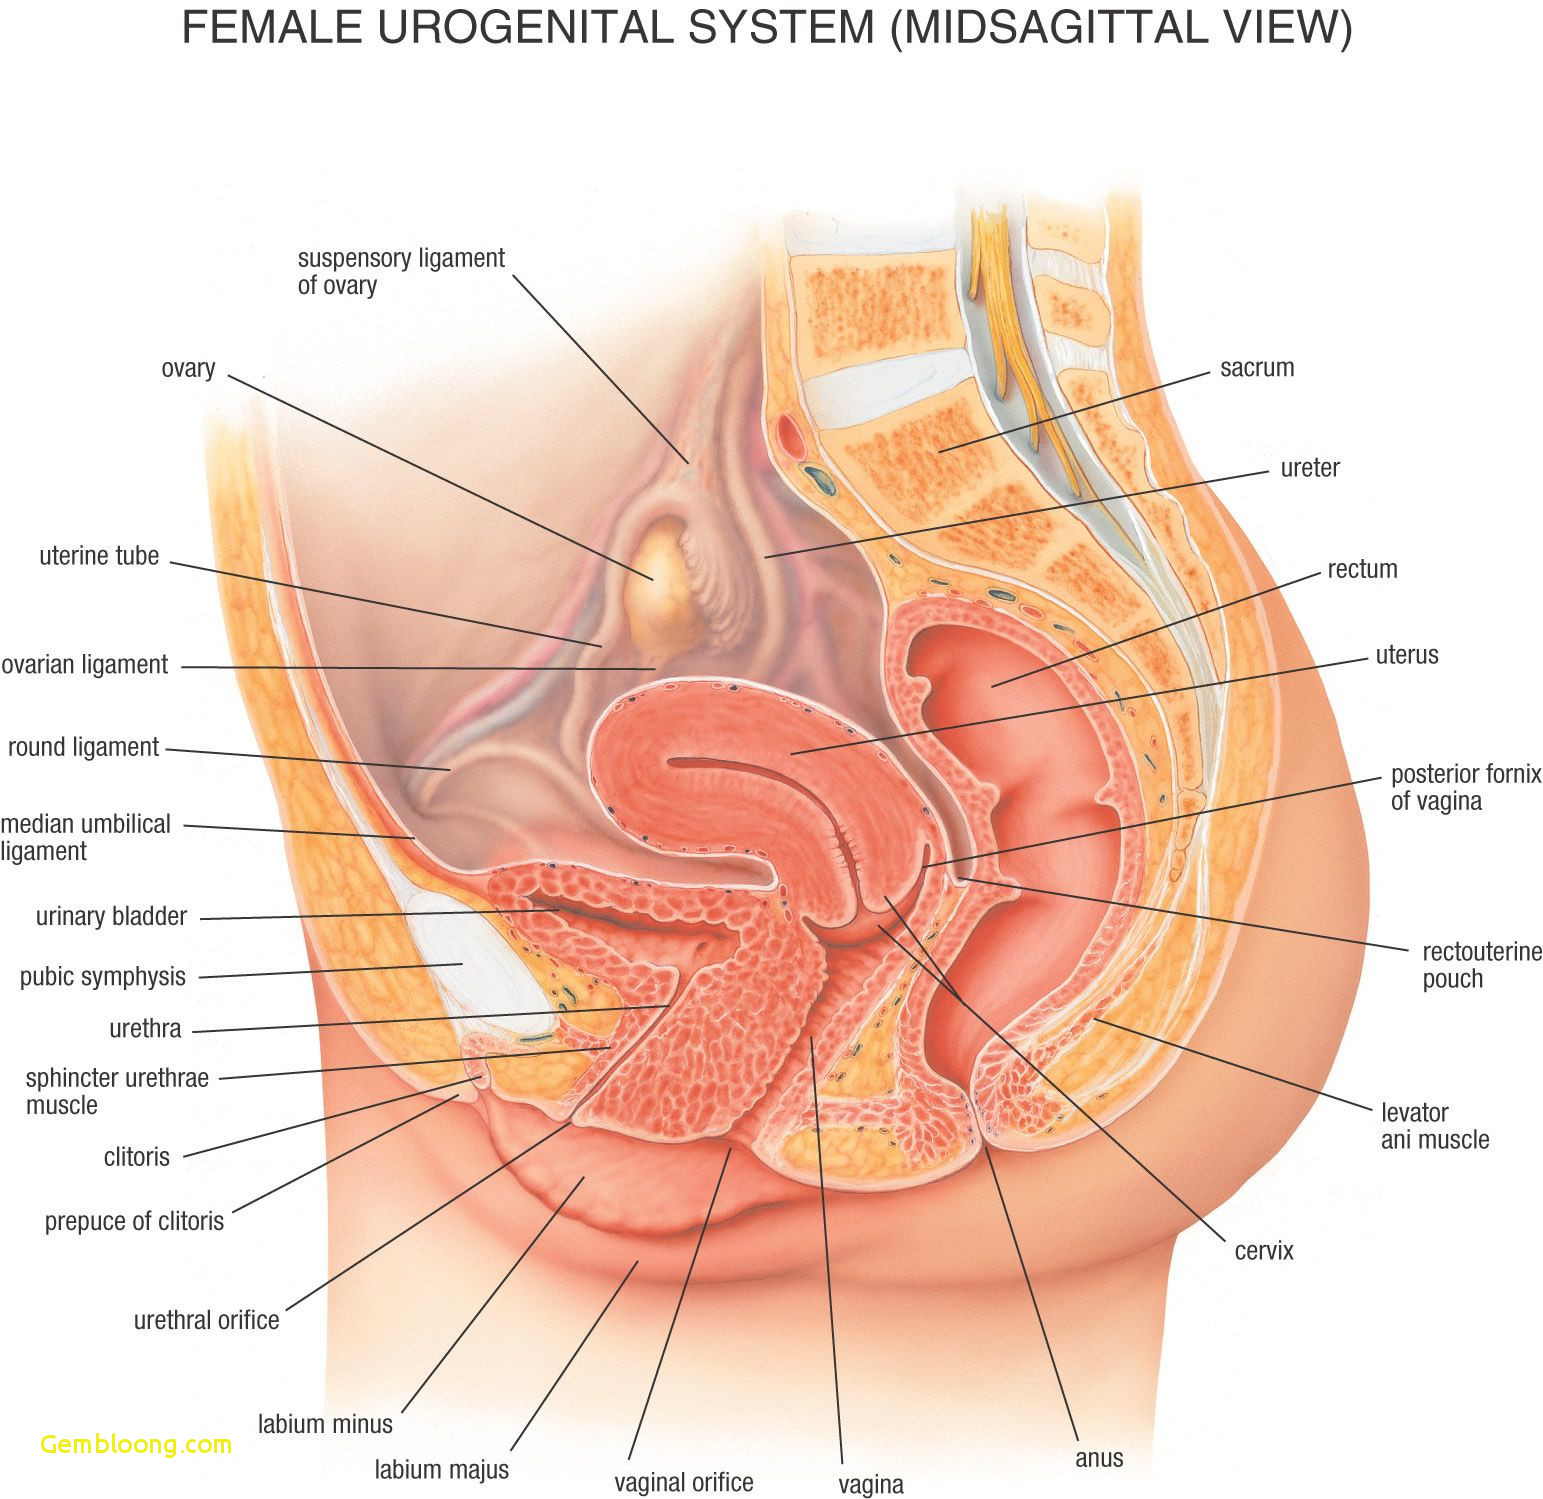 Male Anatomy Diagram The Male Anatomy Internal Female Organs Diagram Human Anatomy